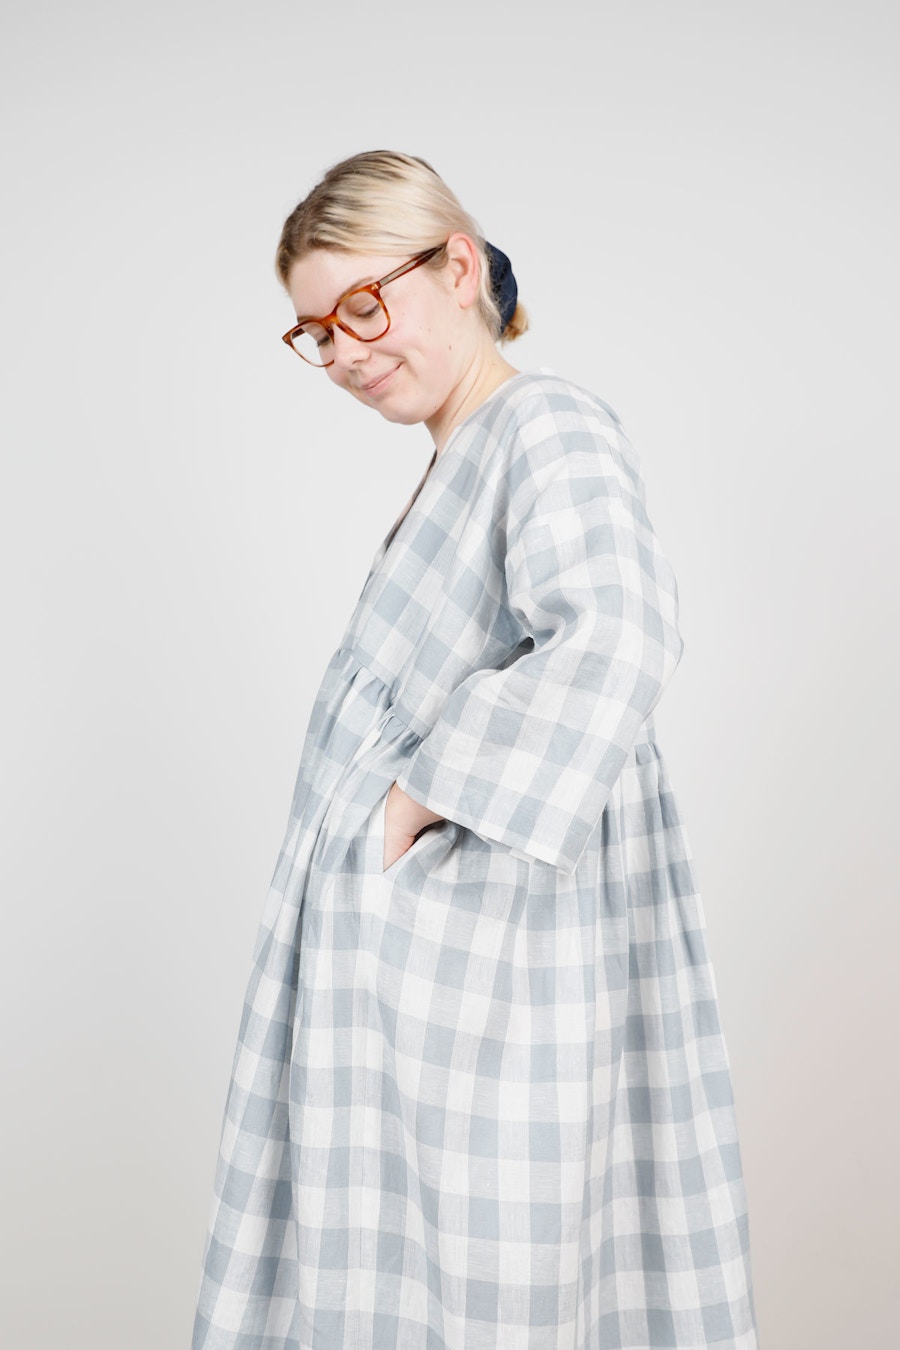 Pocket Birgitta Helmersson Zero Waste Gather Dress Duck Egg Gingham Linen by The Fabric Store